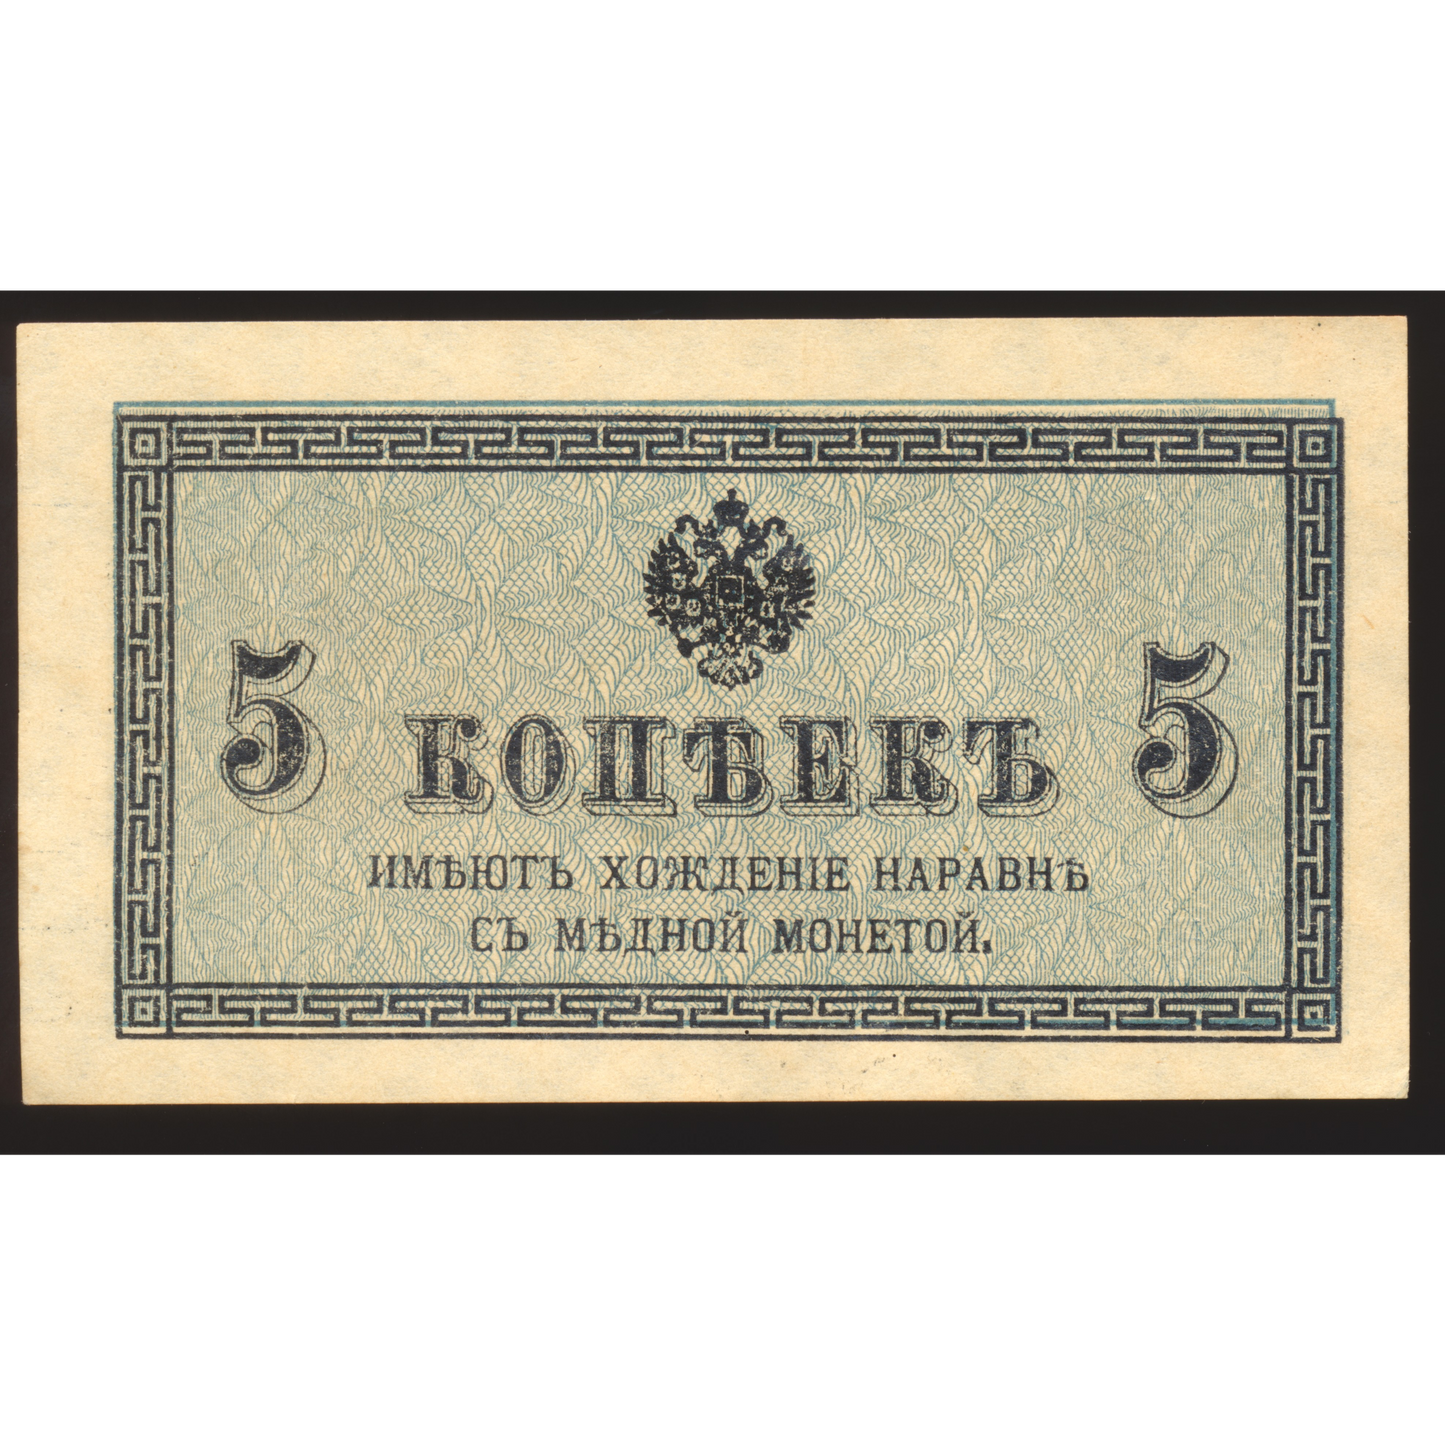 RUSSIA P.27 1915 5 Kopeks UNC